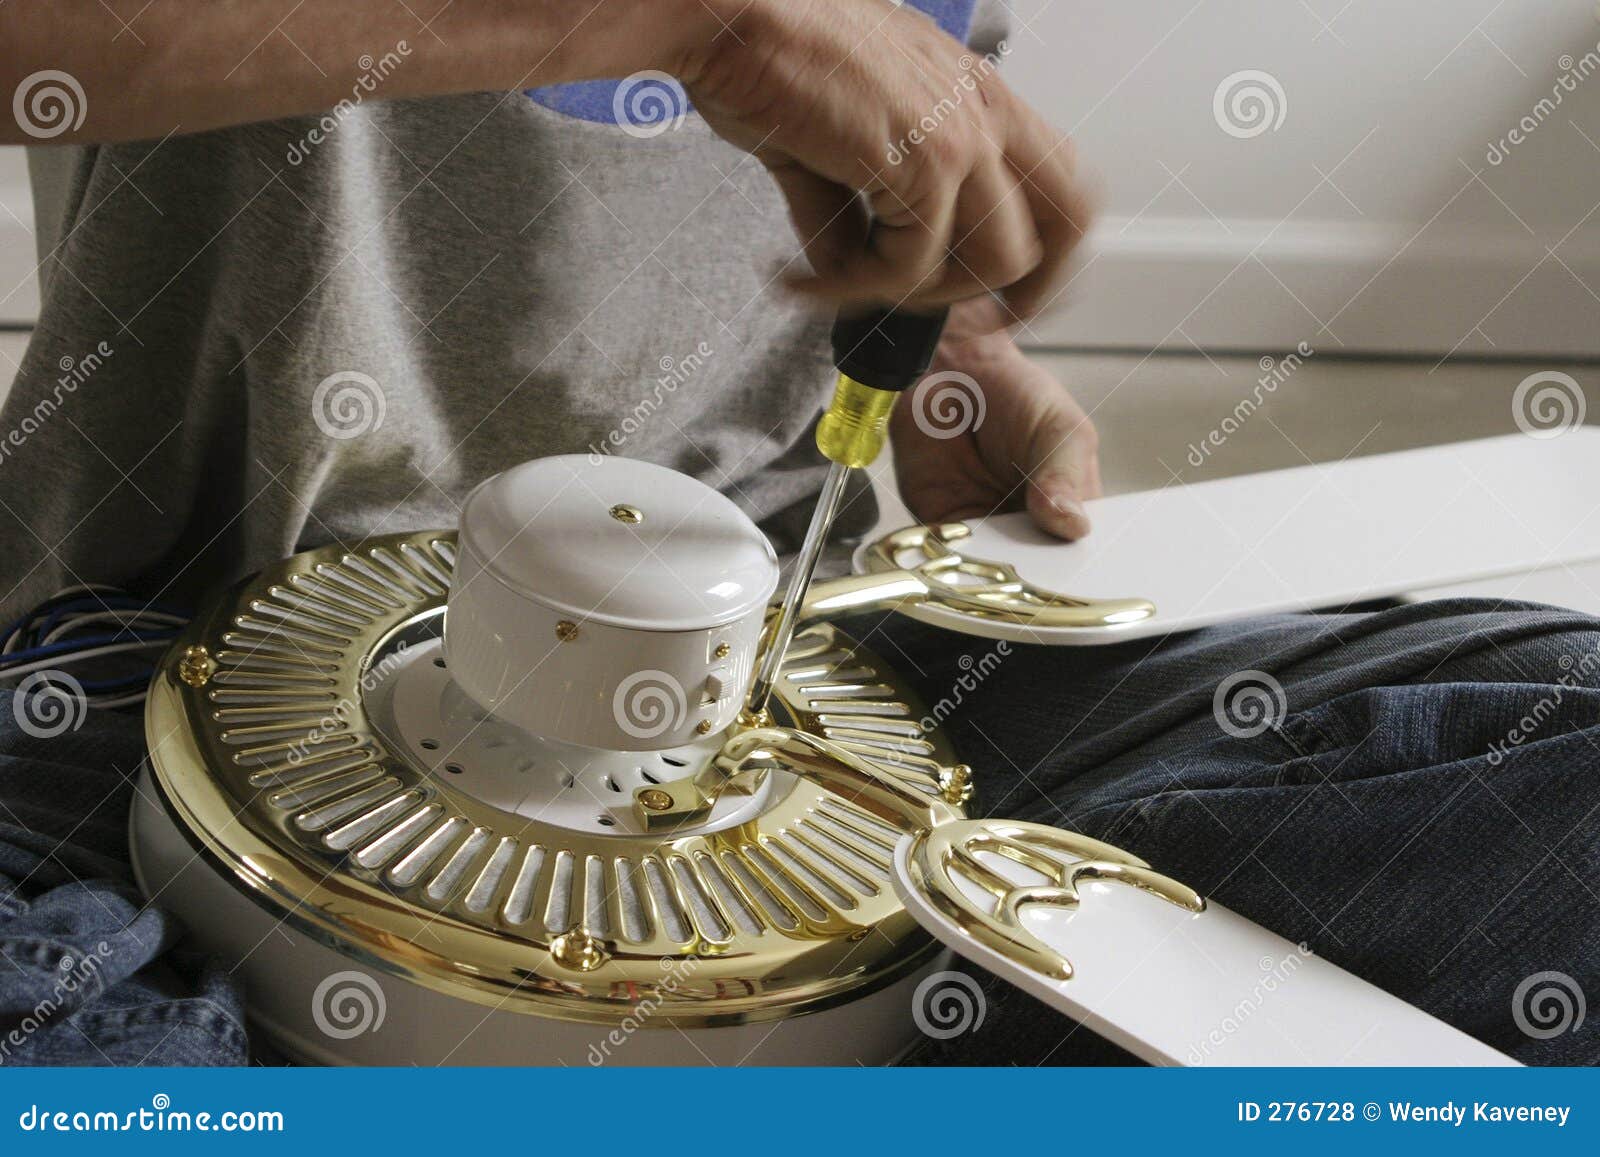 hands assembling a ceiling fan